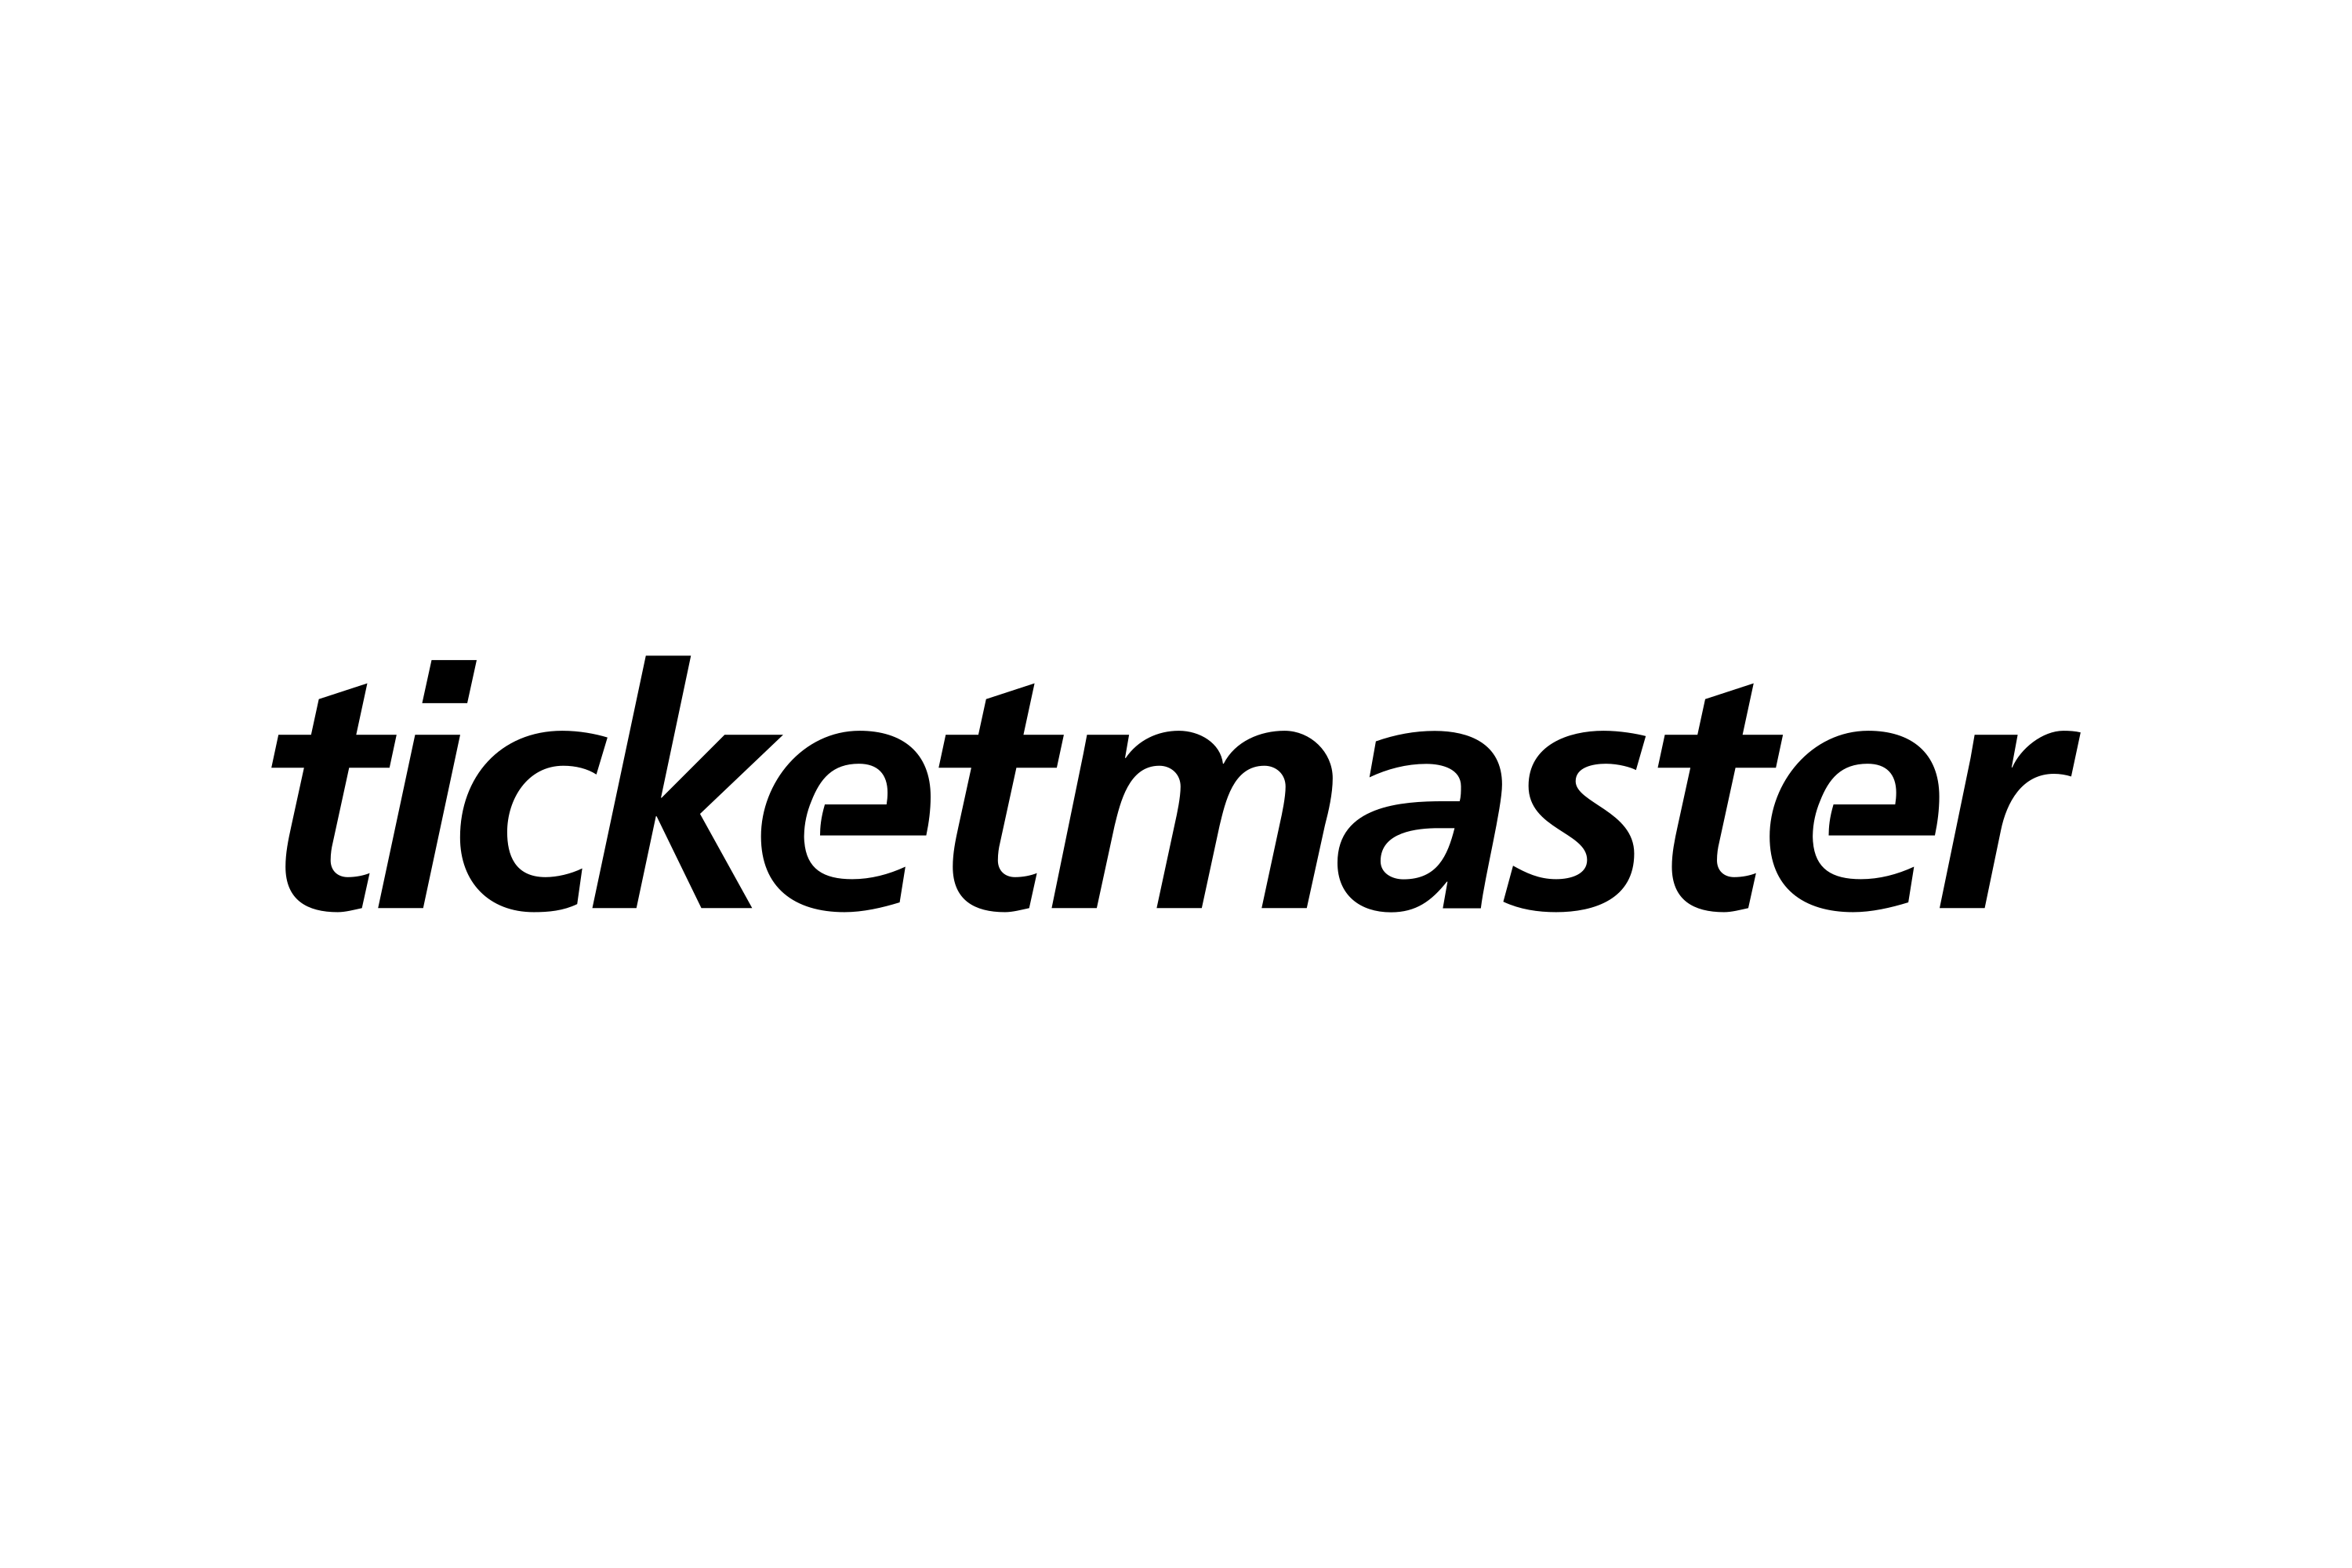 Download Ticketmaster Logo in SVG Vector or PNG File Format Logo.wine